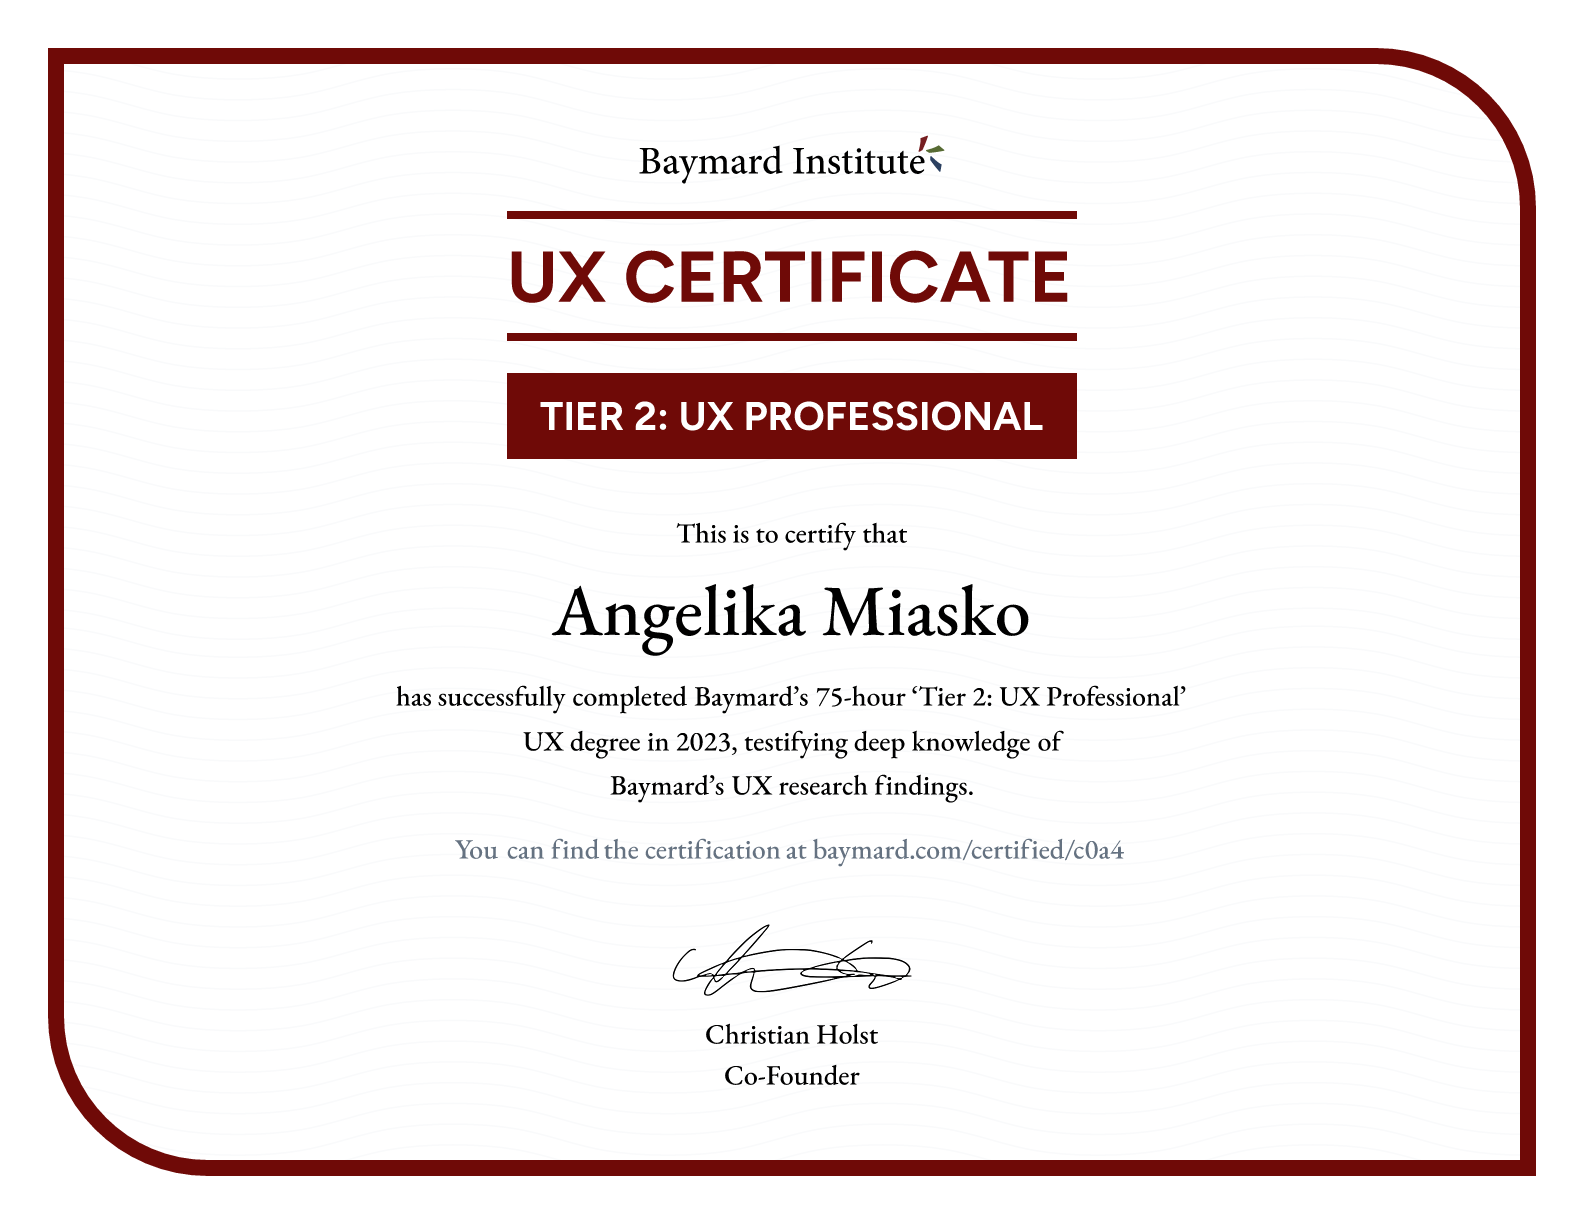 Angelika Miasko’s certificate